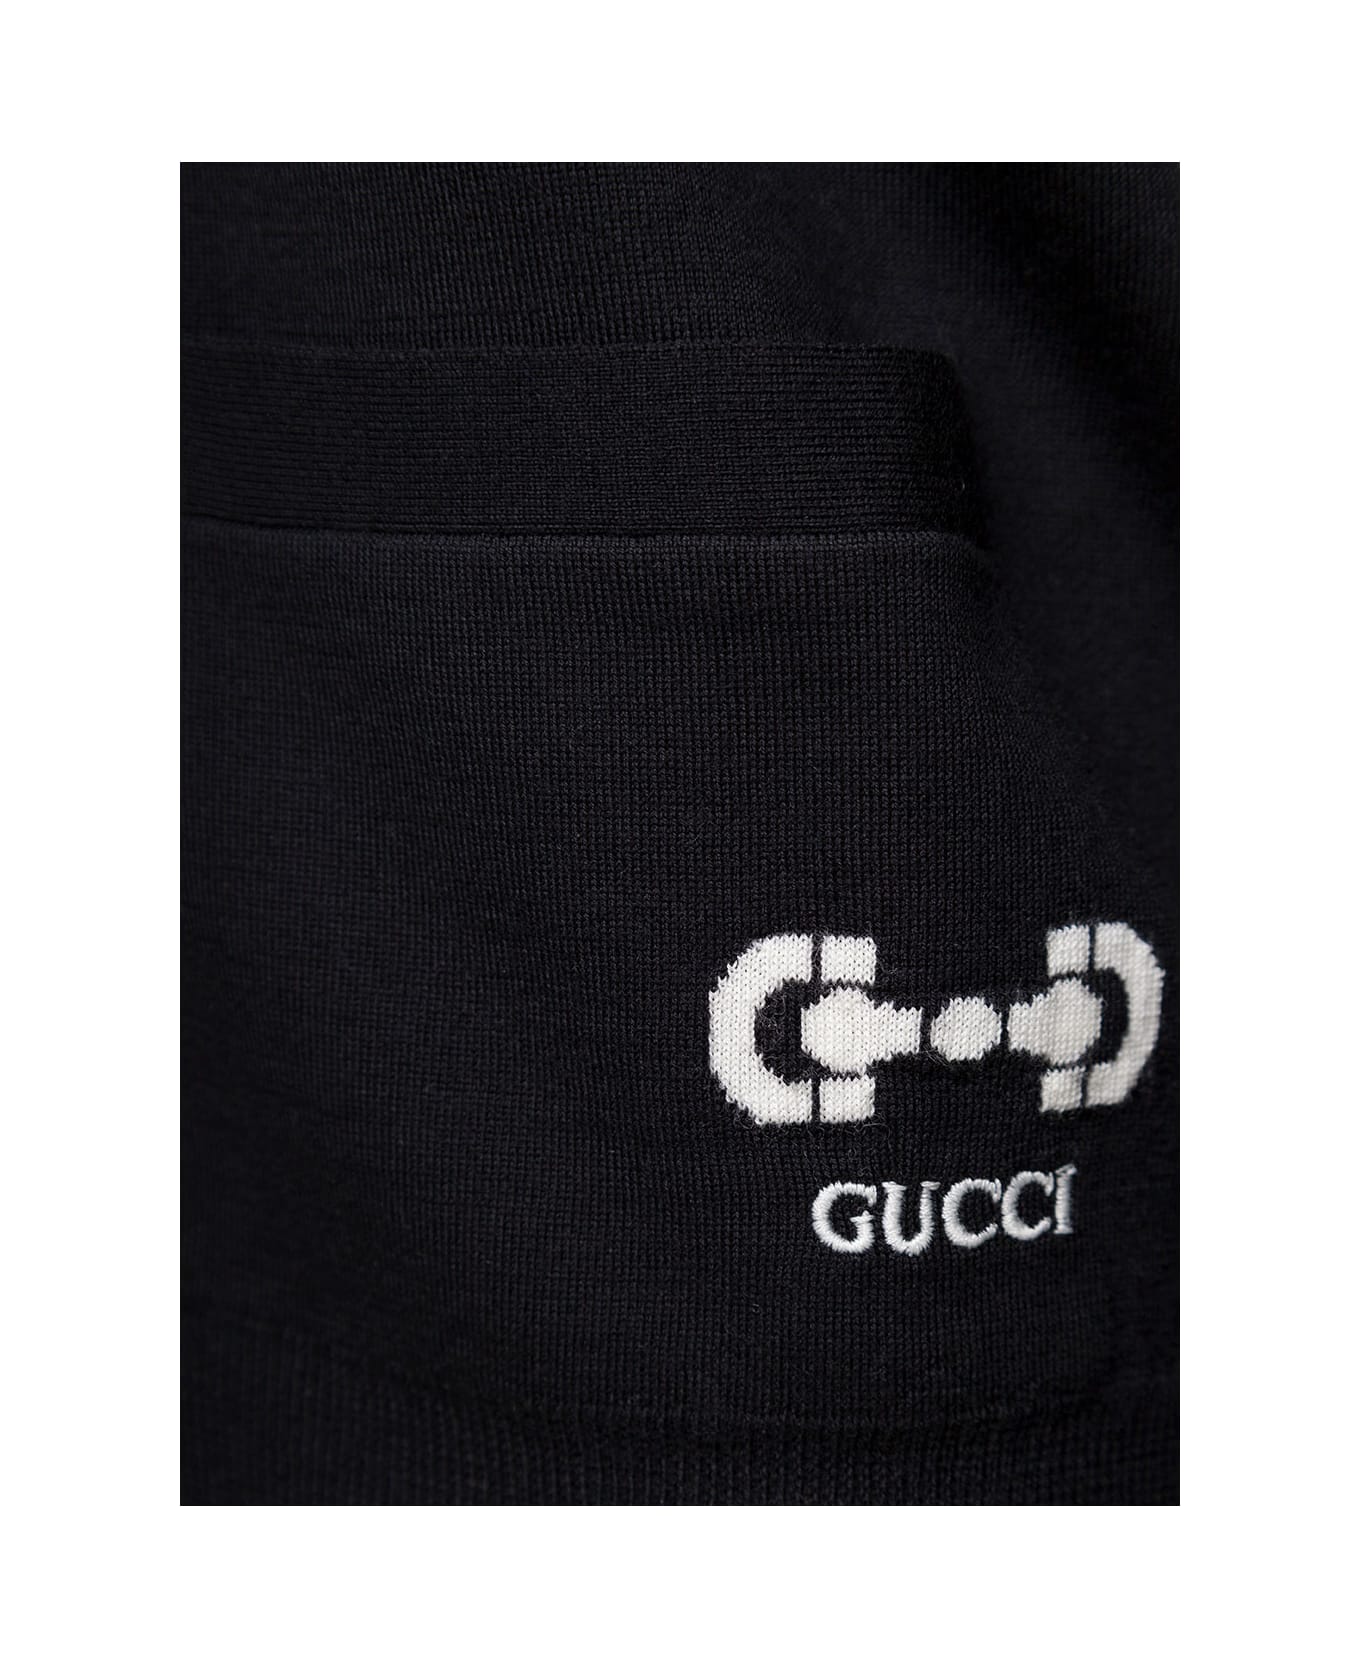 Gucci Gg Intarsia Knit Cardigan - Black